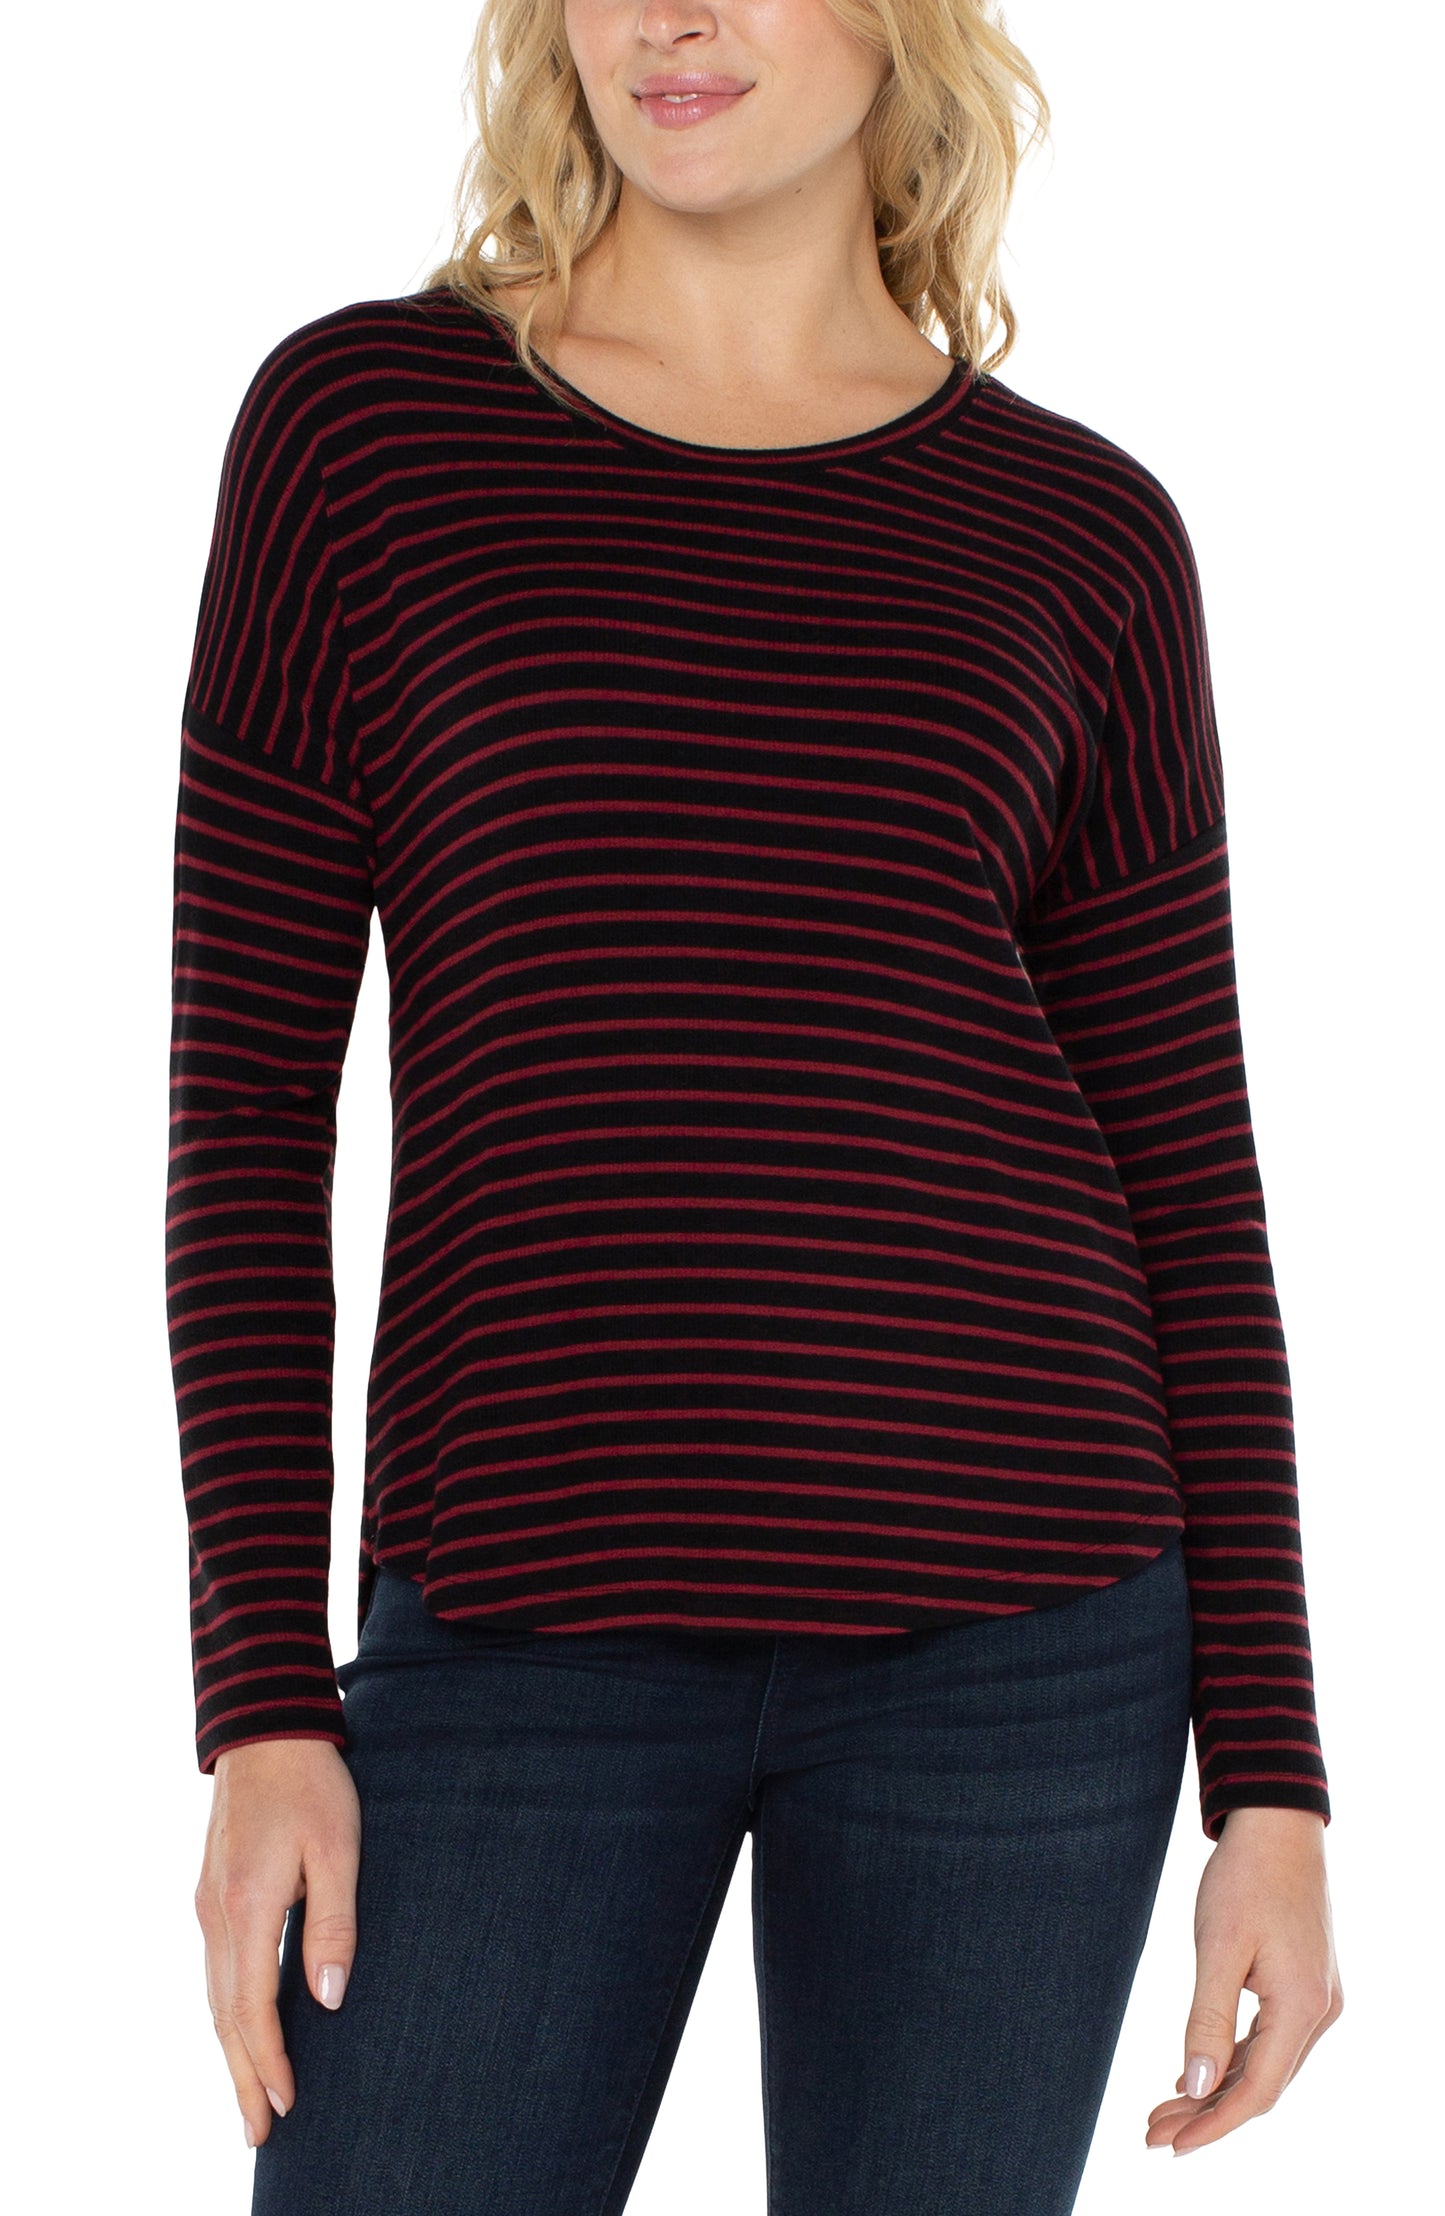 Liverpool Black/Red Stripe Stripe Long Sleeve Knit Top